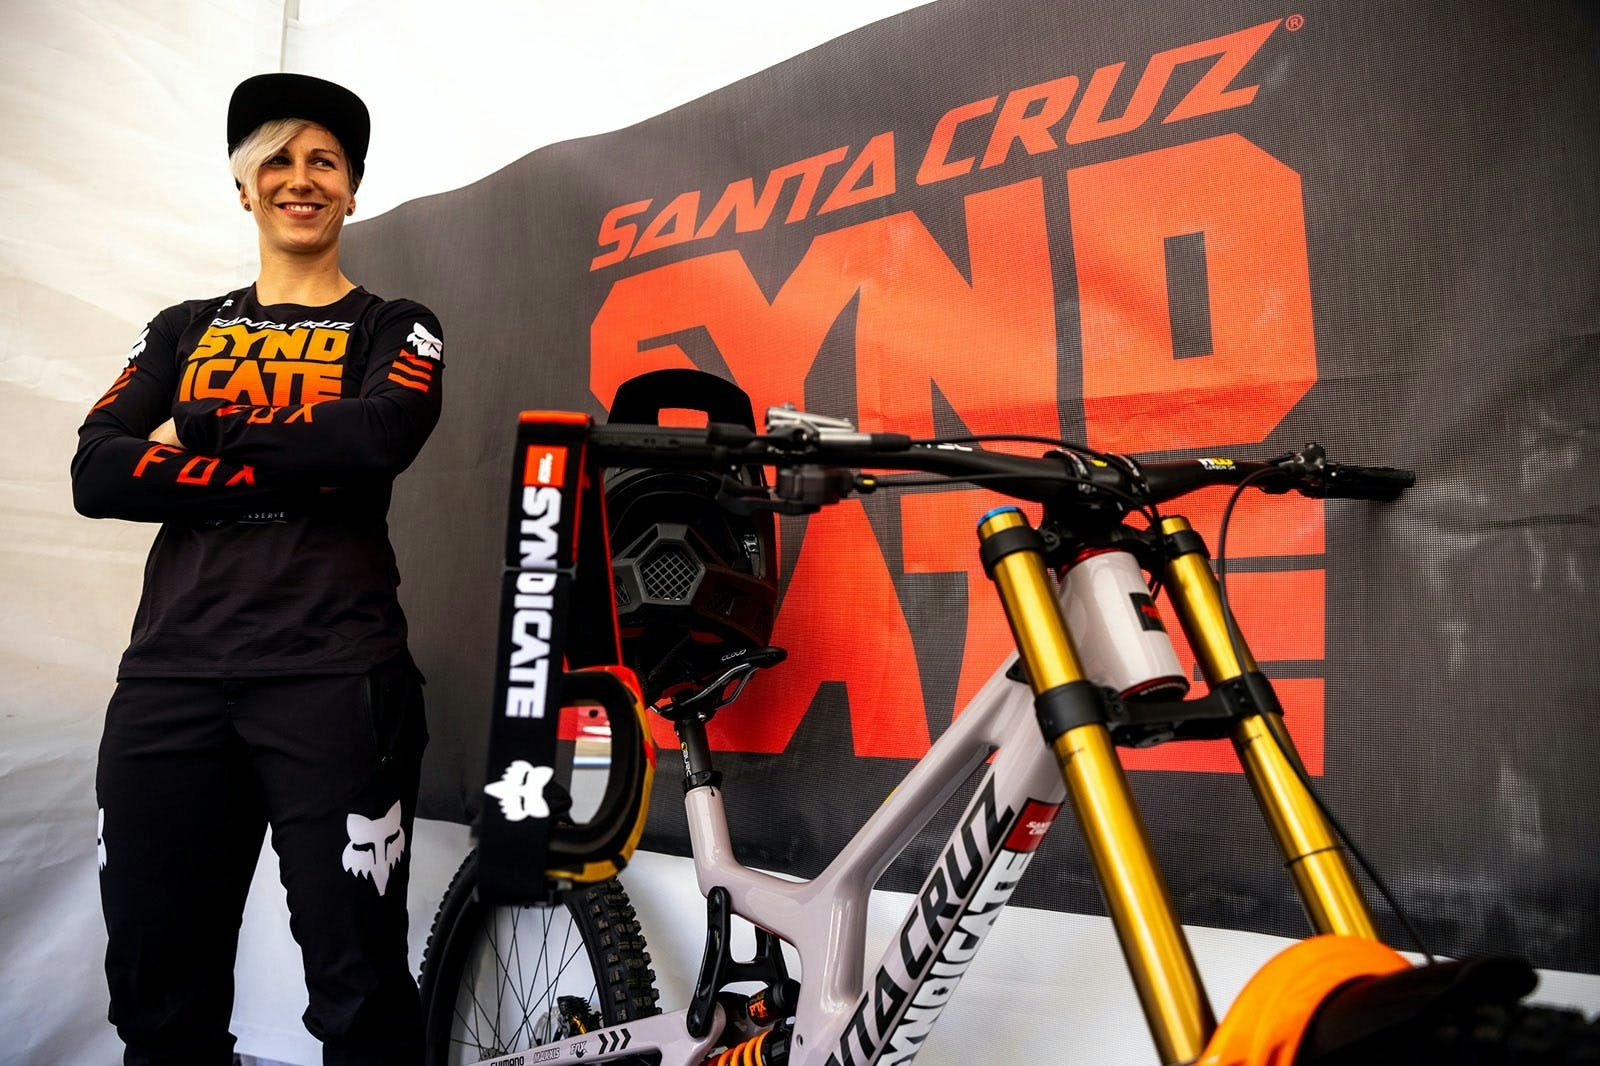 Nina Hoffmann und ihr Santa Cruz V10 Downhill Racebike